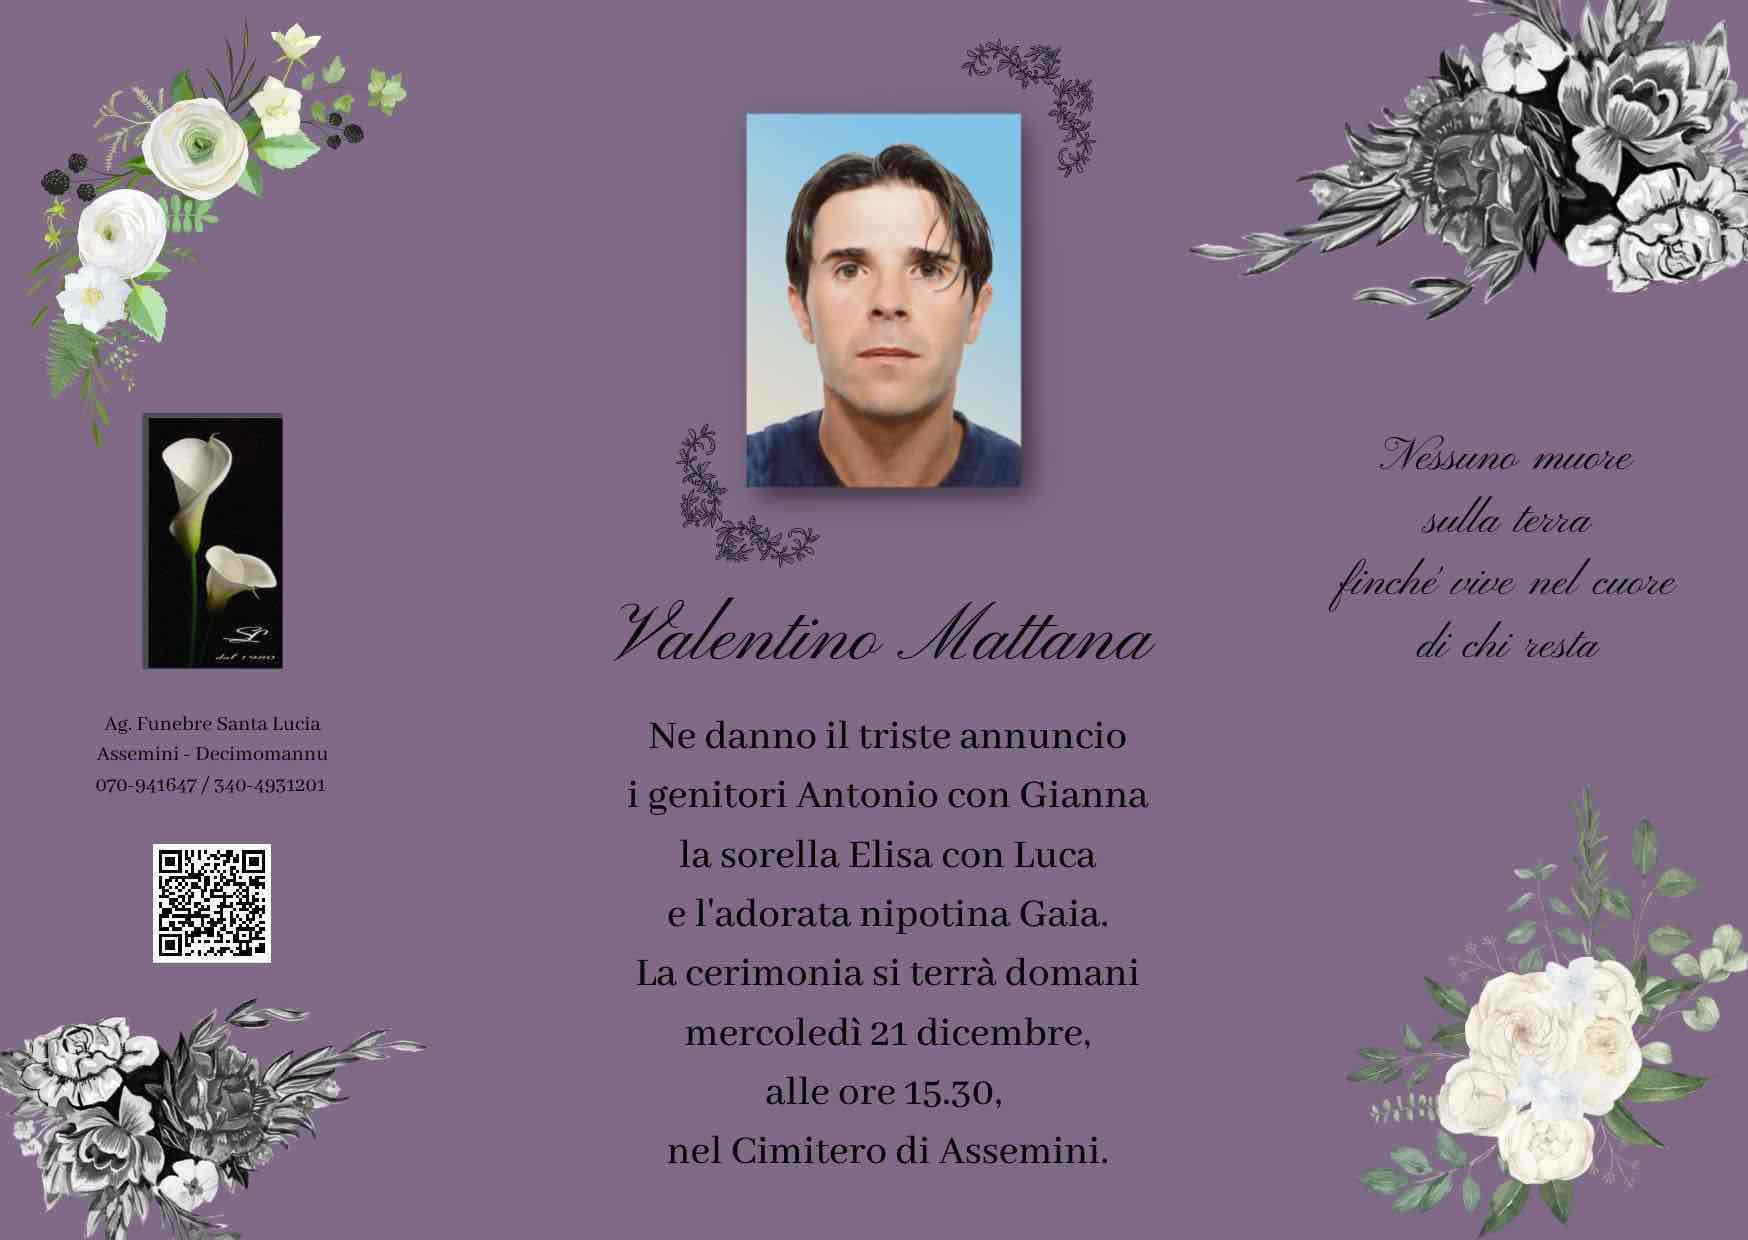 Valentino Mattana